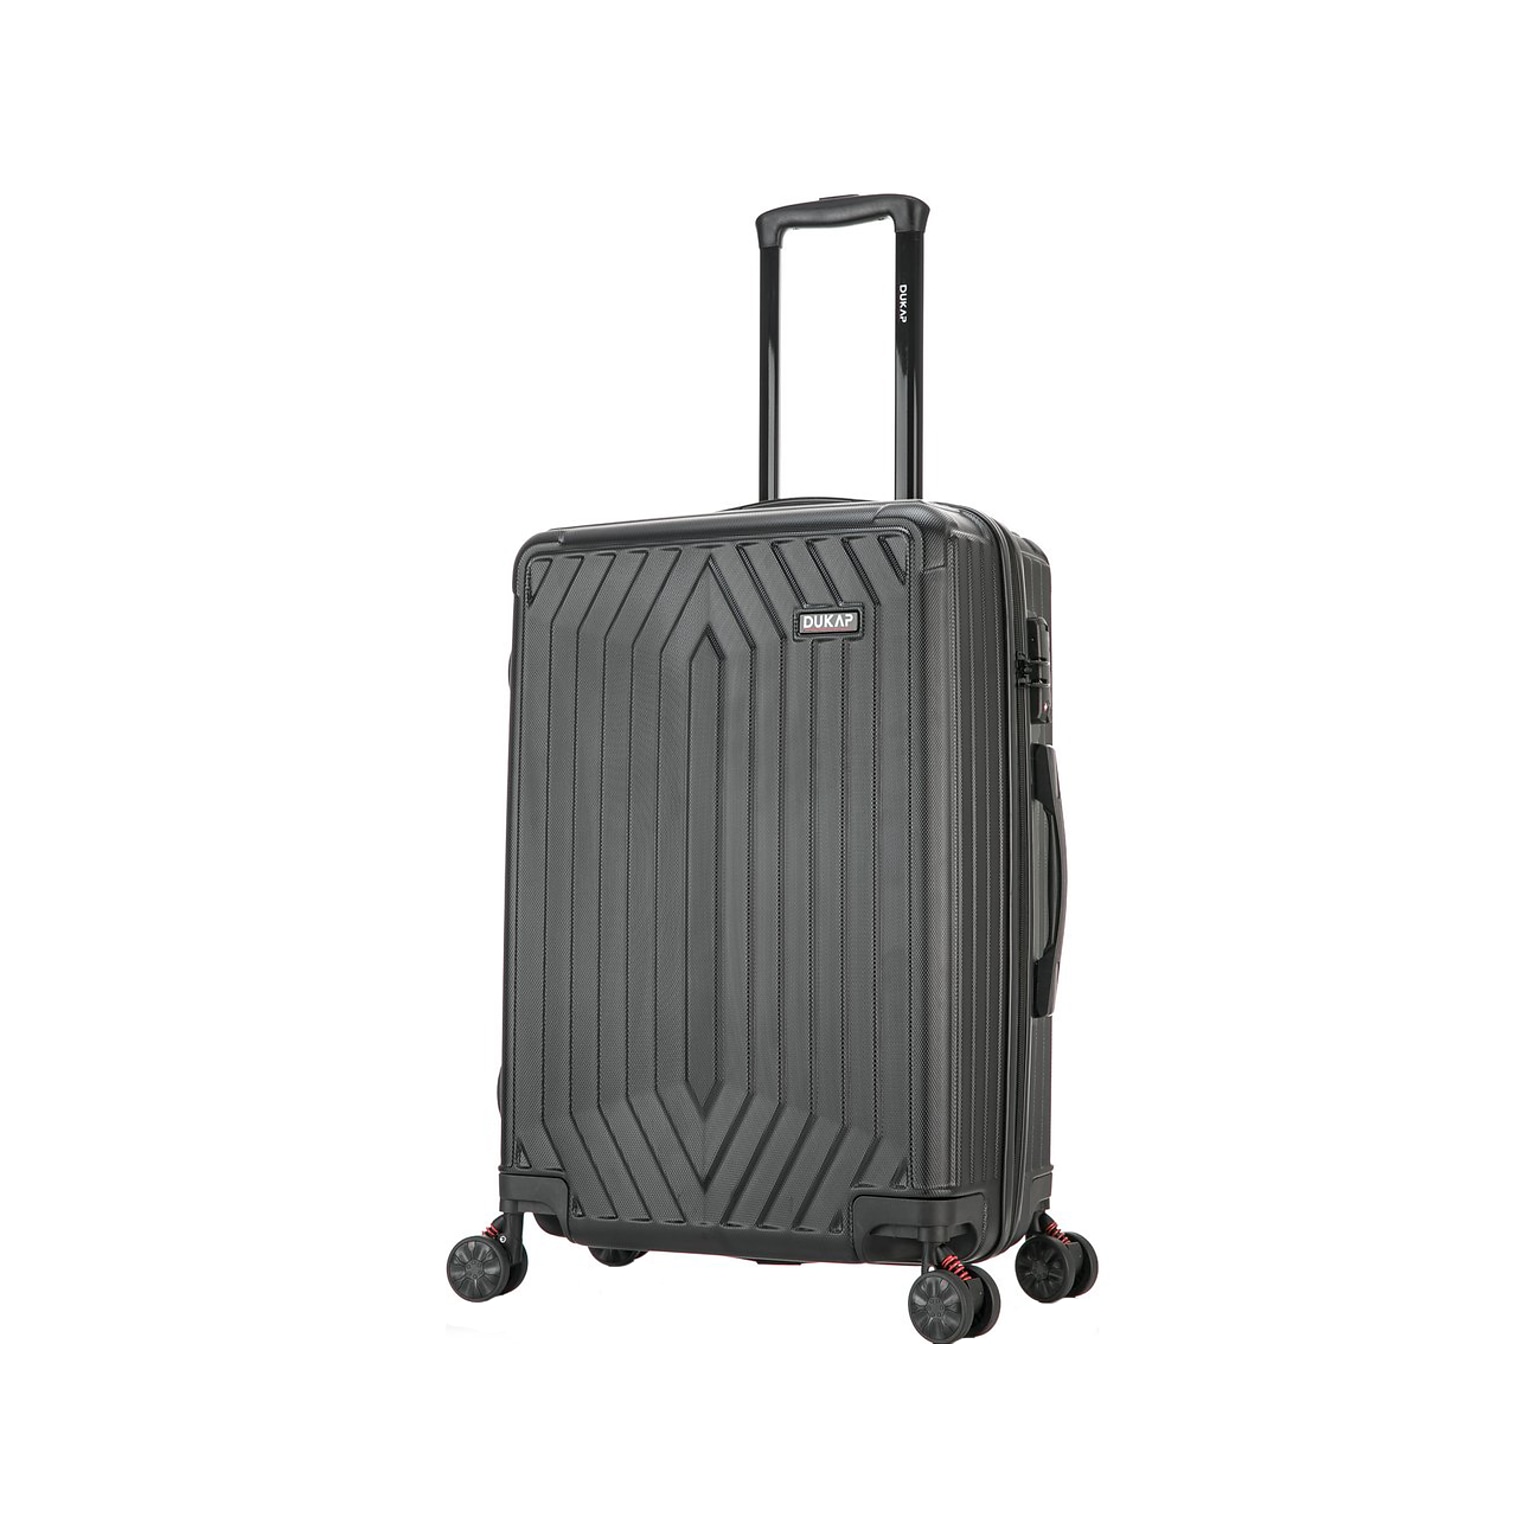 DUKAP Stratos 25.59 Hardside Suitcase, 4-Wheeled Spinner, TSA Checkpoint Friendly, Black (DKSTR00M-BLK)